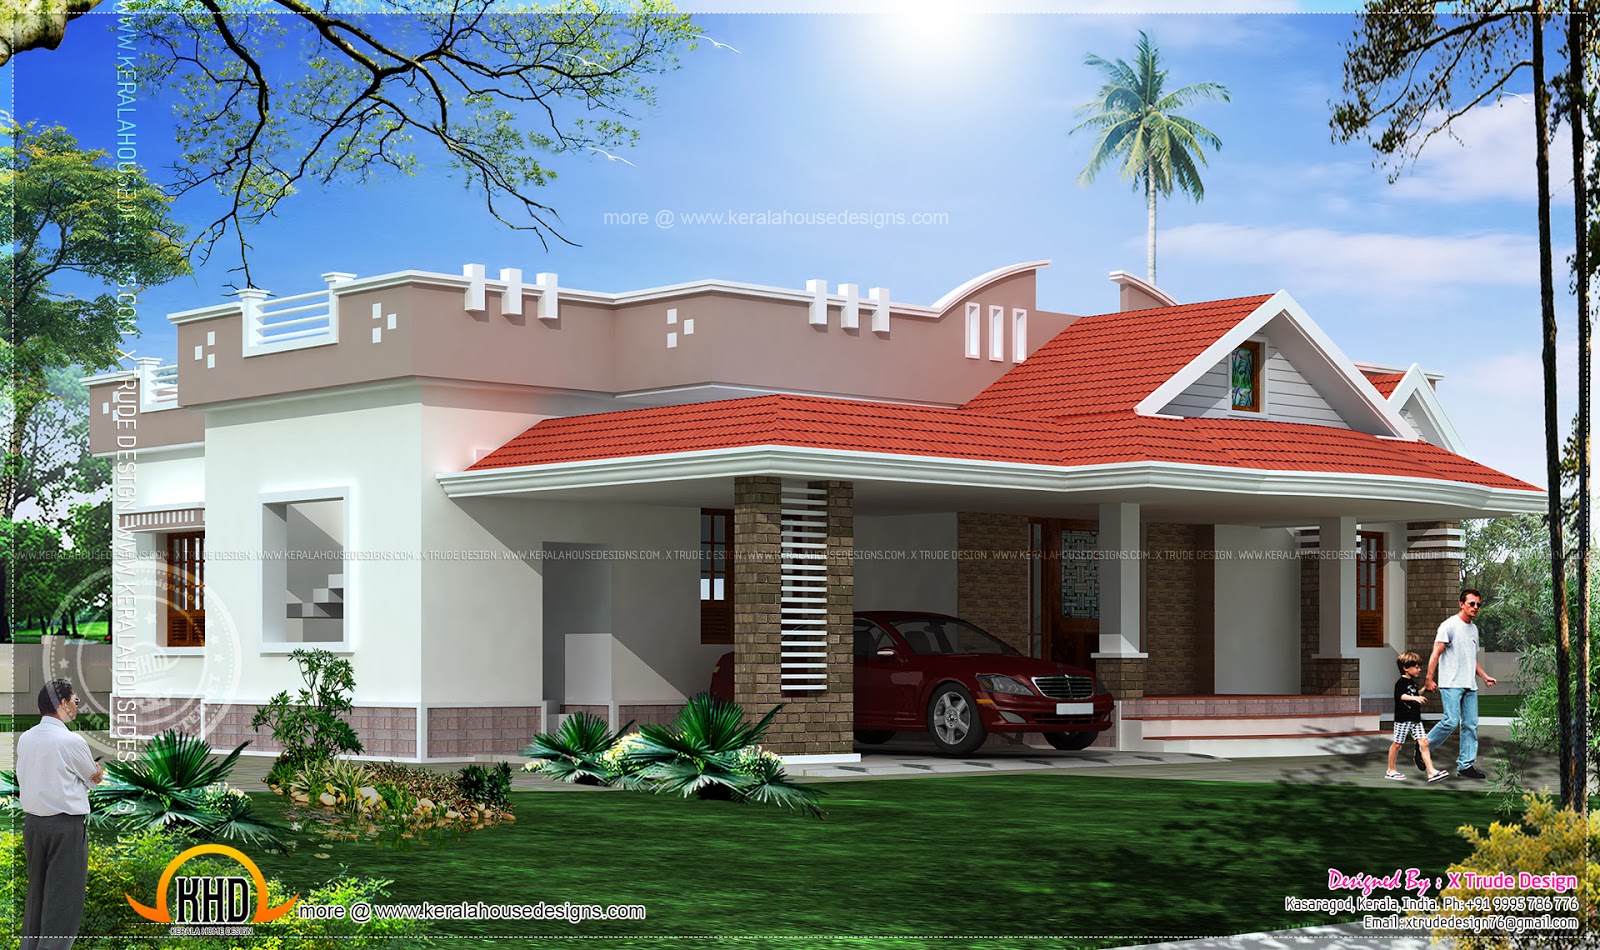  Single  storied 2 bedroom house  elevation  Kerala home  